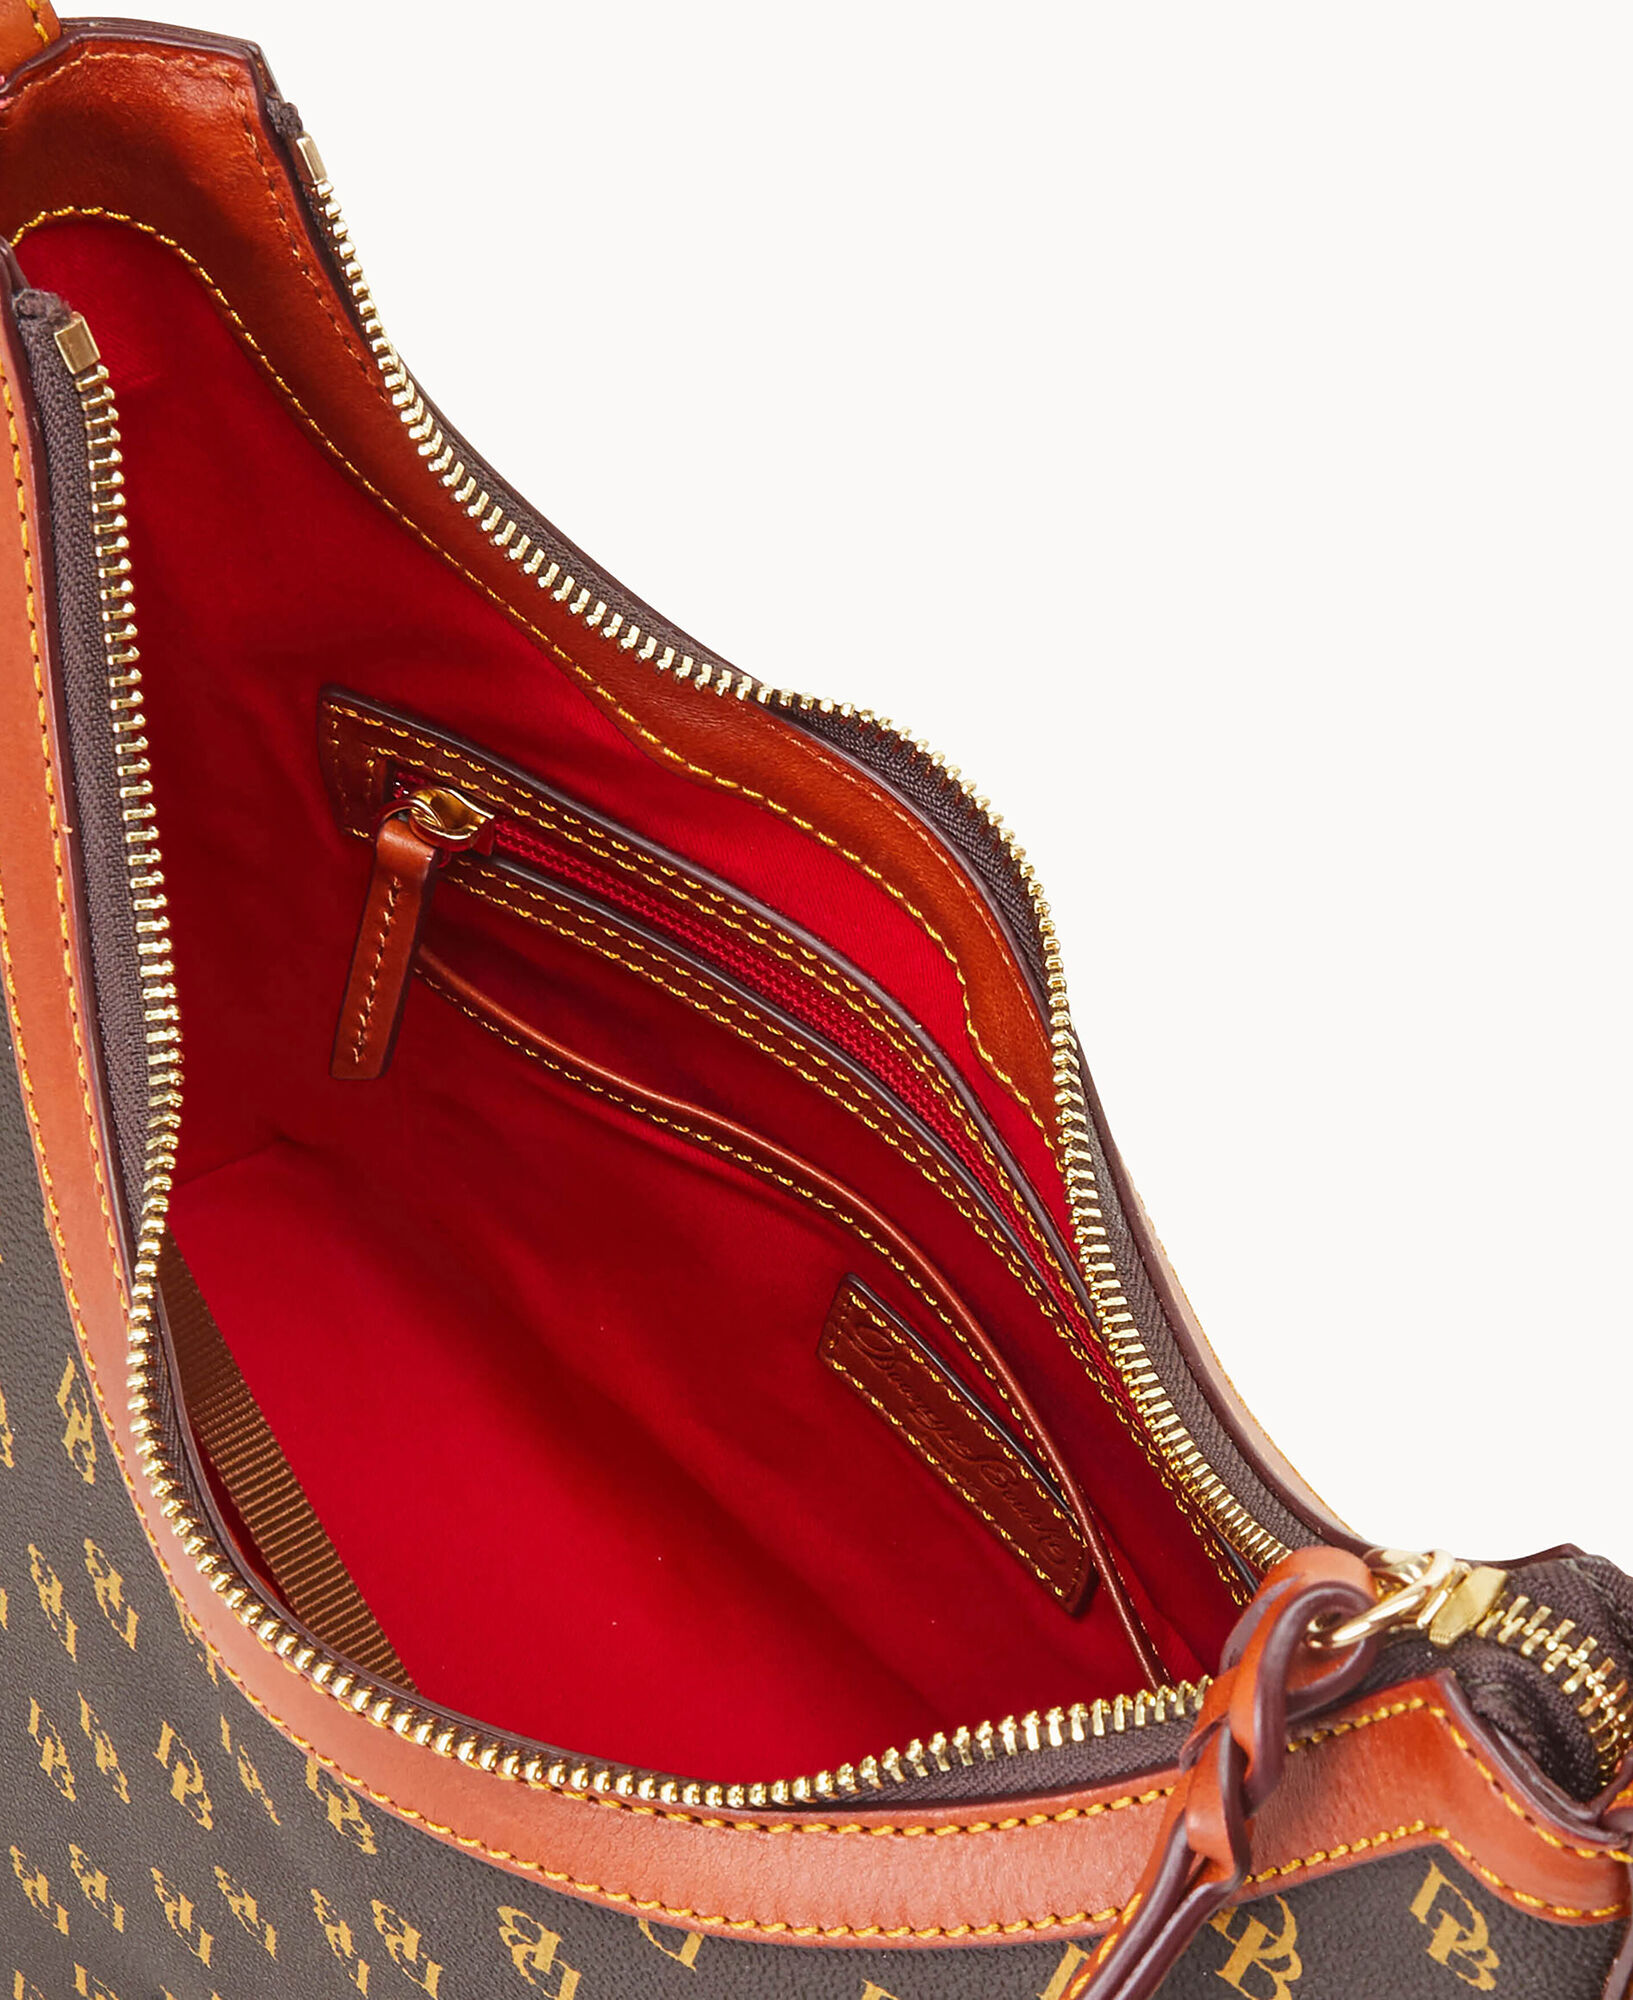 Dooney & Bourke Handbag, Gretta Small Zip Crossbody - Bordeaux: Handbags